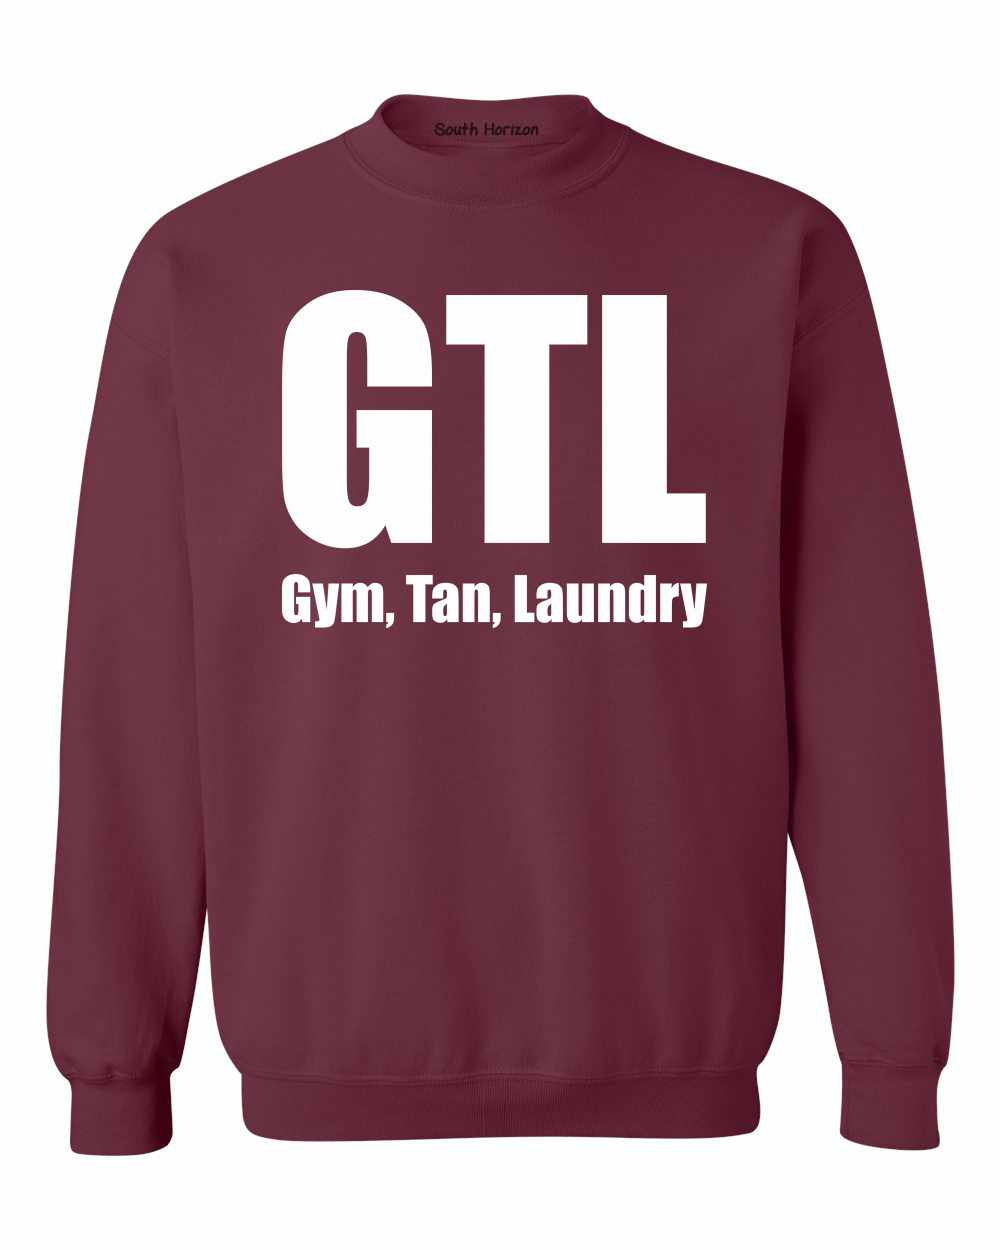 GTL Gym, Tan, Laundry on SweatShirt (#727-11)